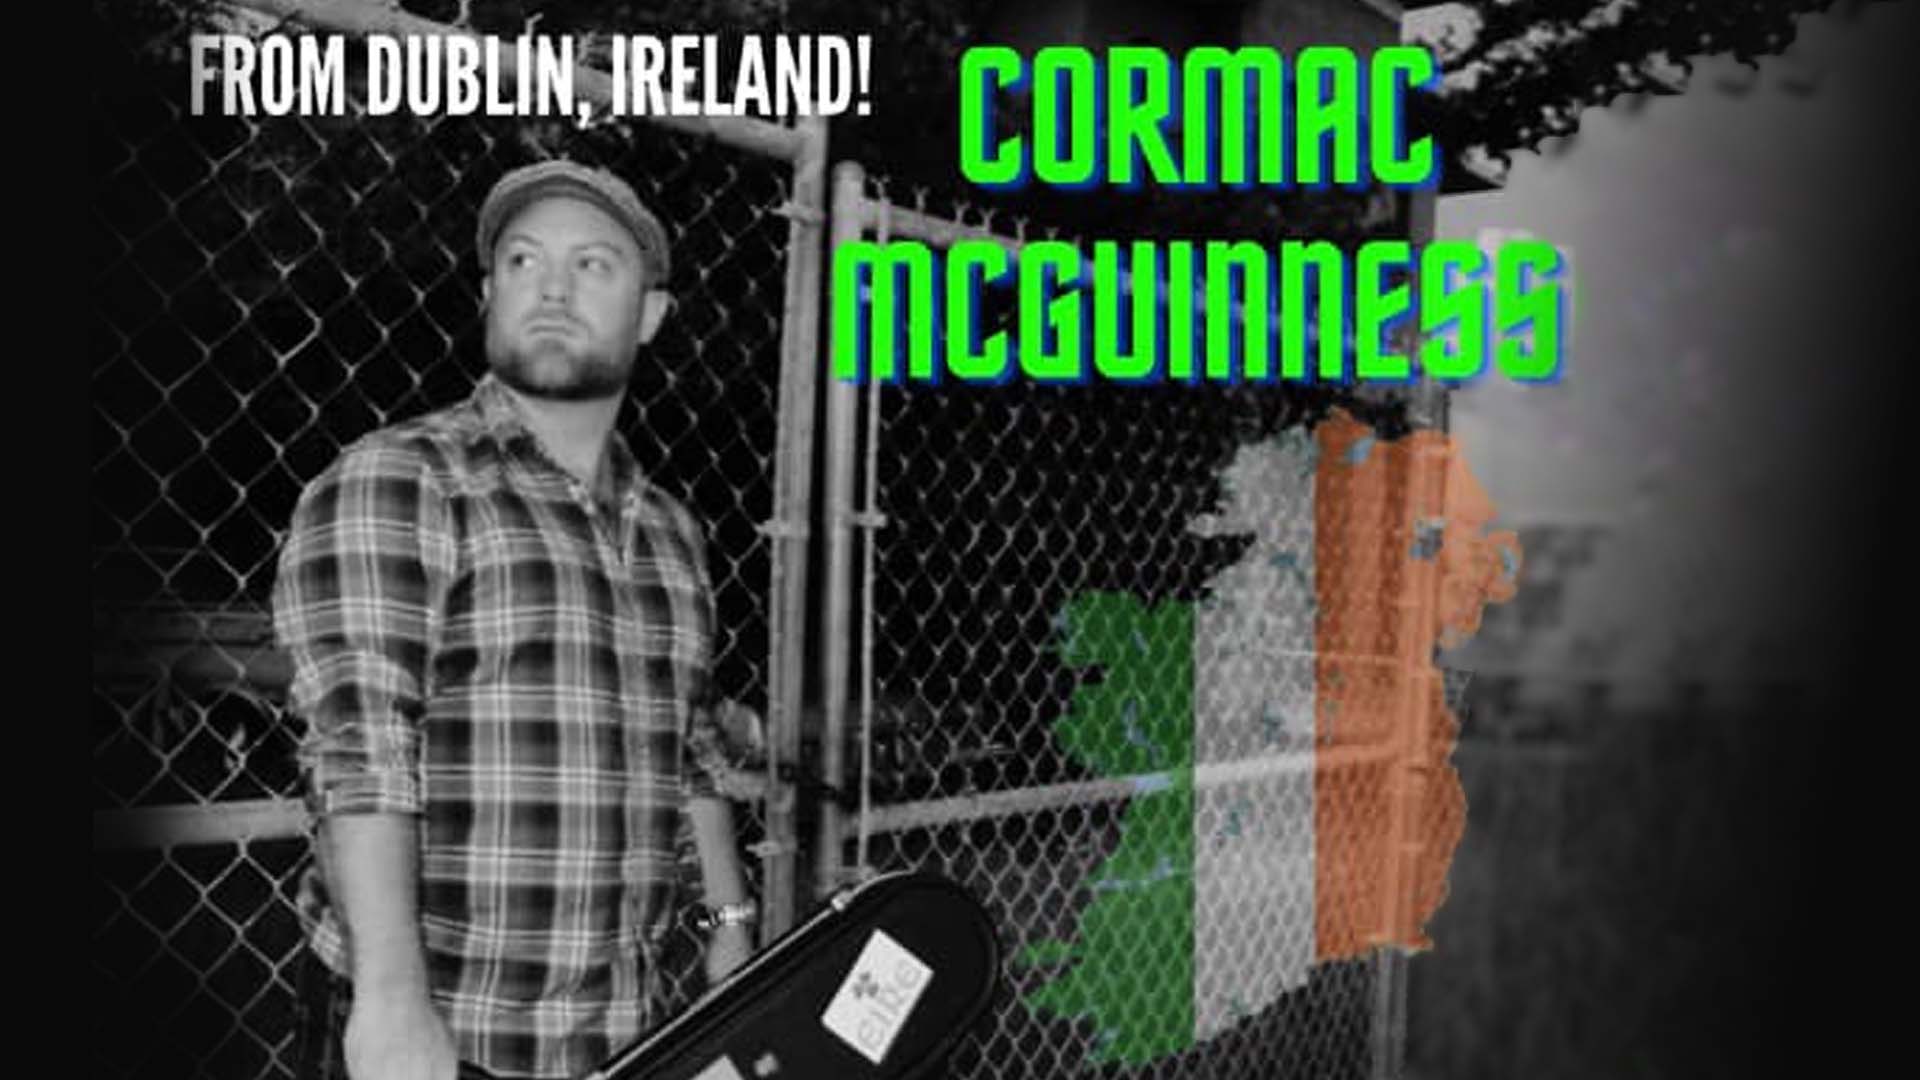 Cormac McGuinness at Tim Finnegans